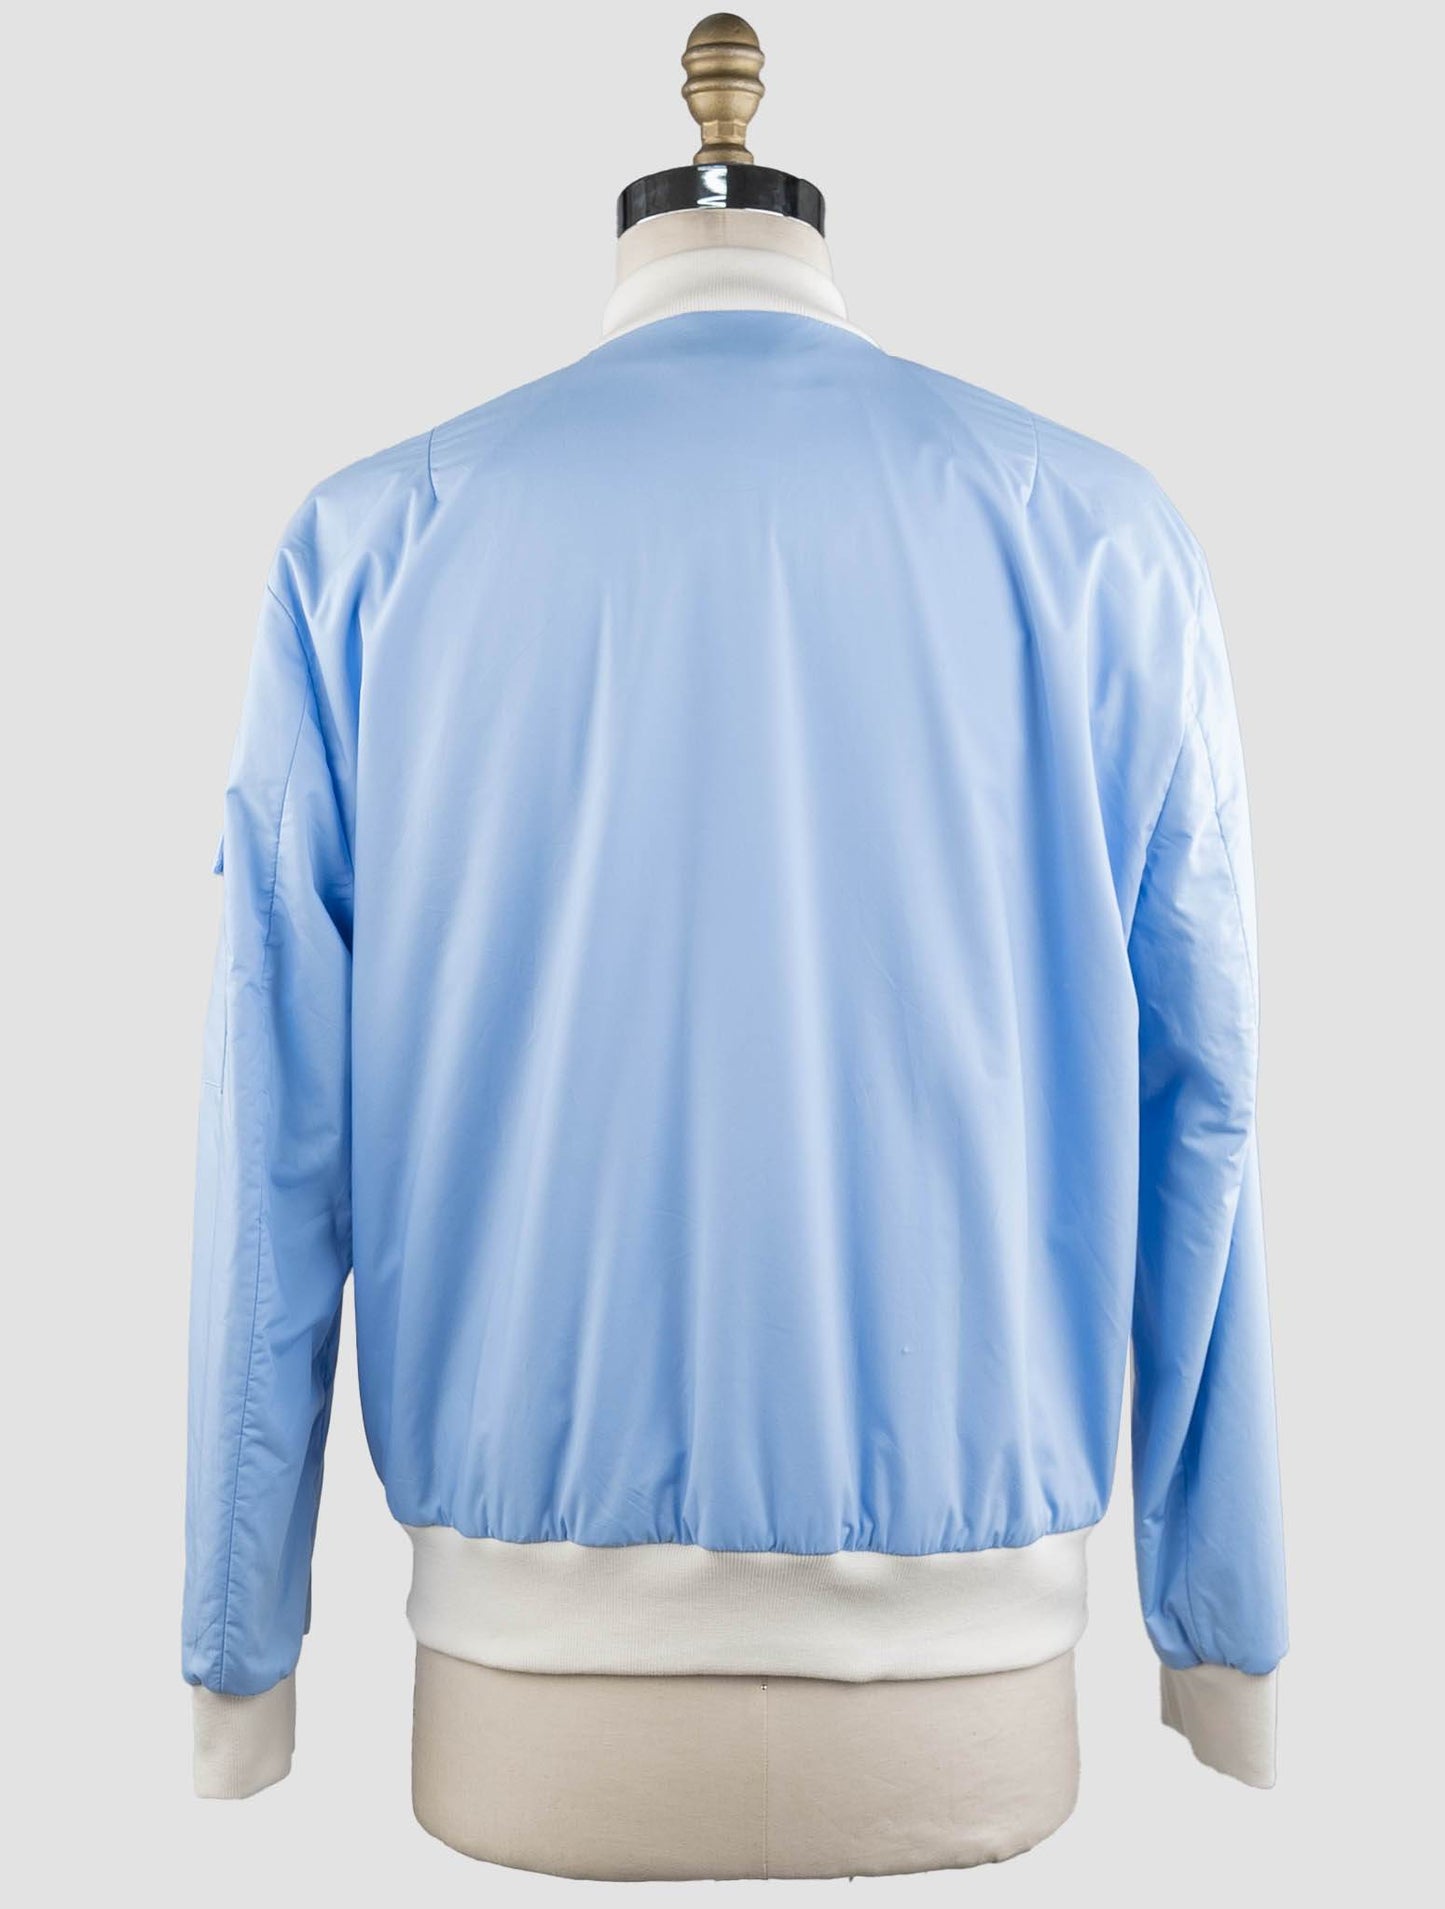 KNT Manteau en coton bleu clair Kiton